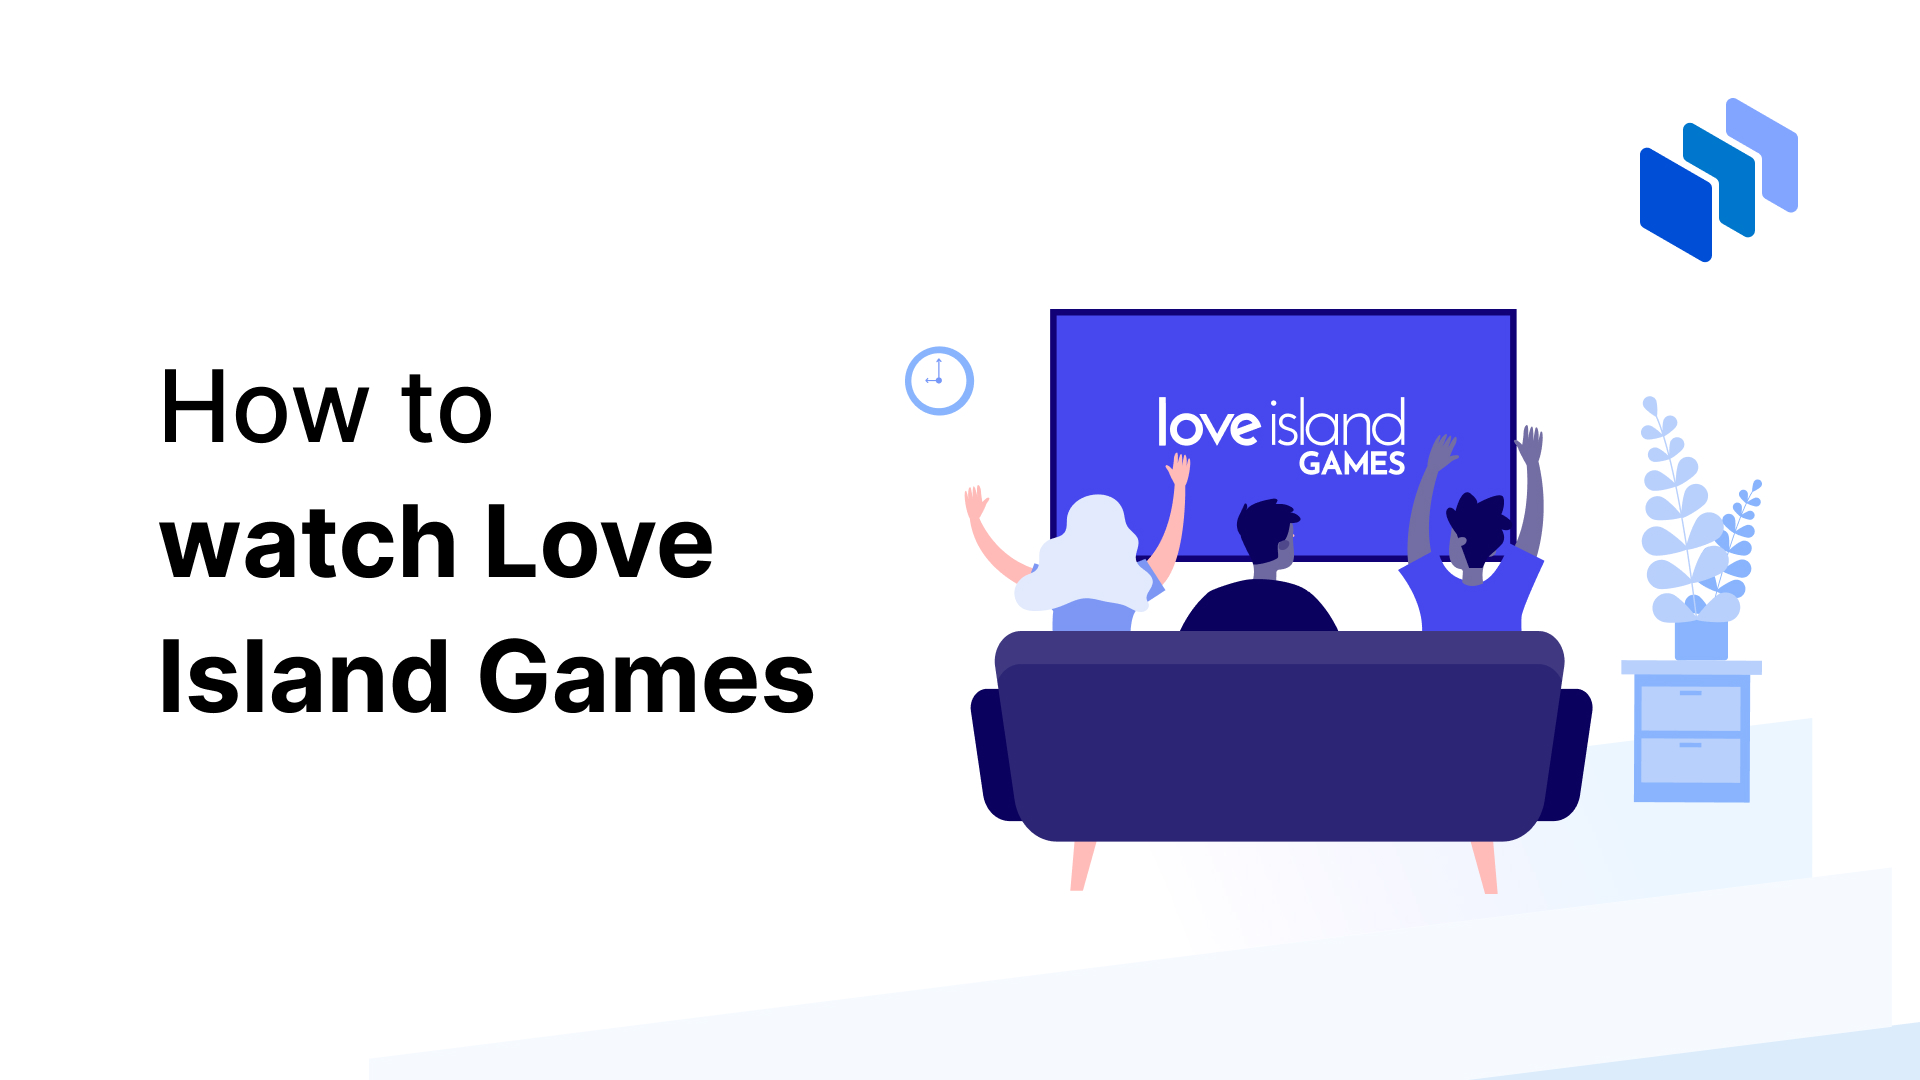 Love Games Online